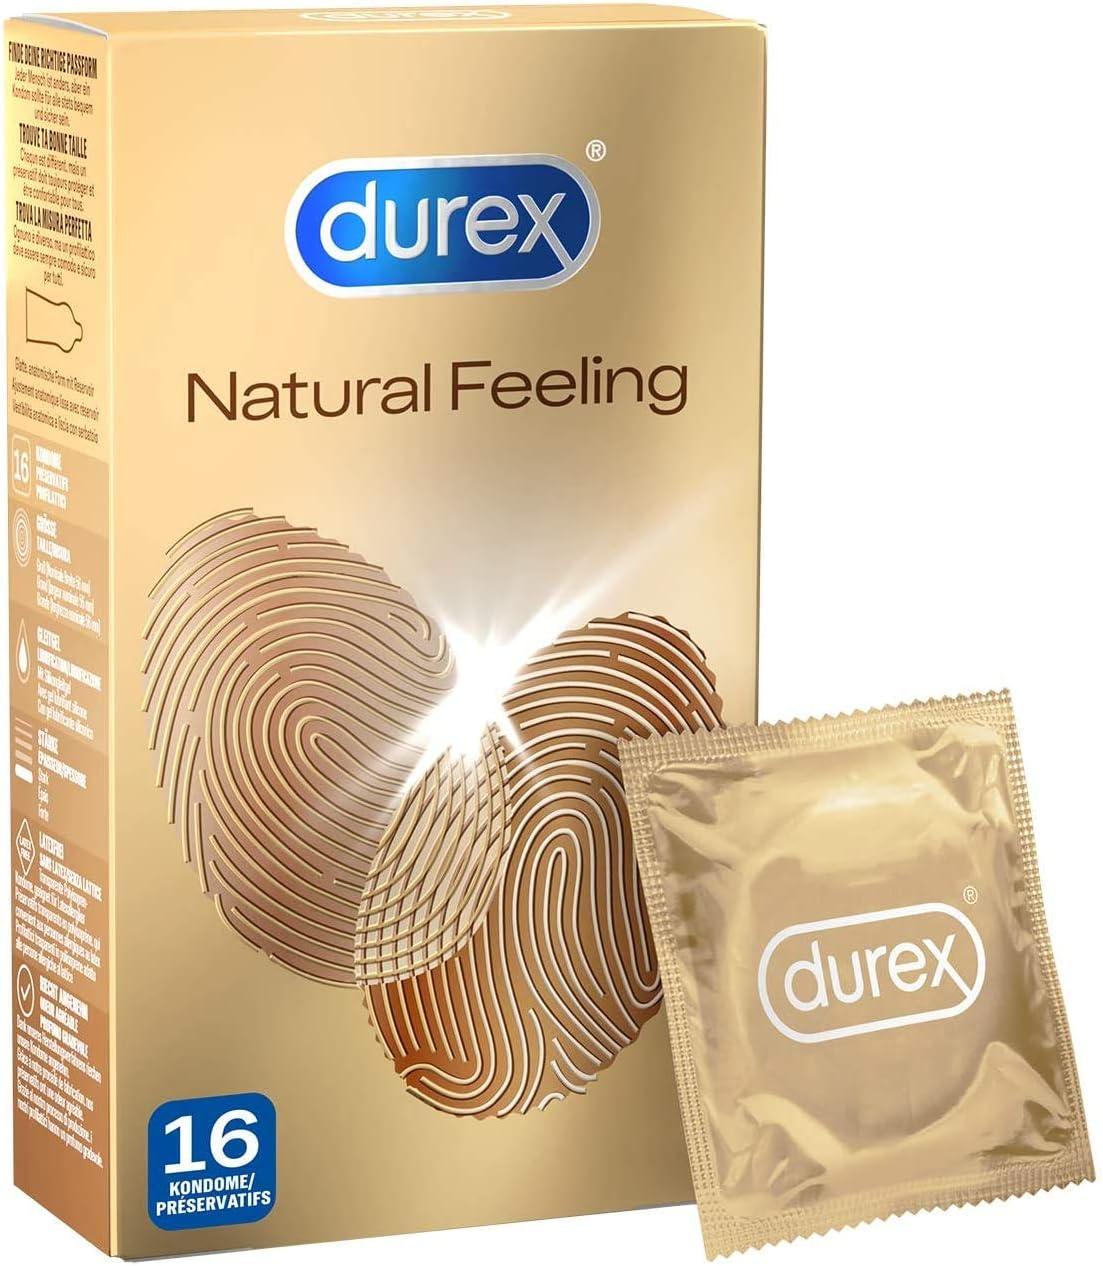 Durex Natural Feeling 16 Pack Condoms RRP 12 CLEARANCE XL 7.99